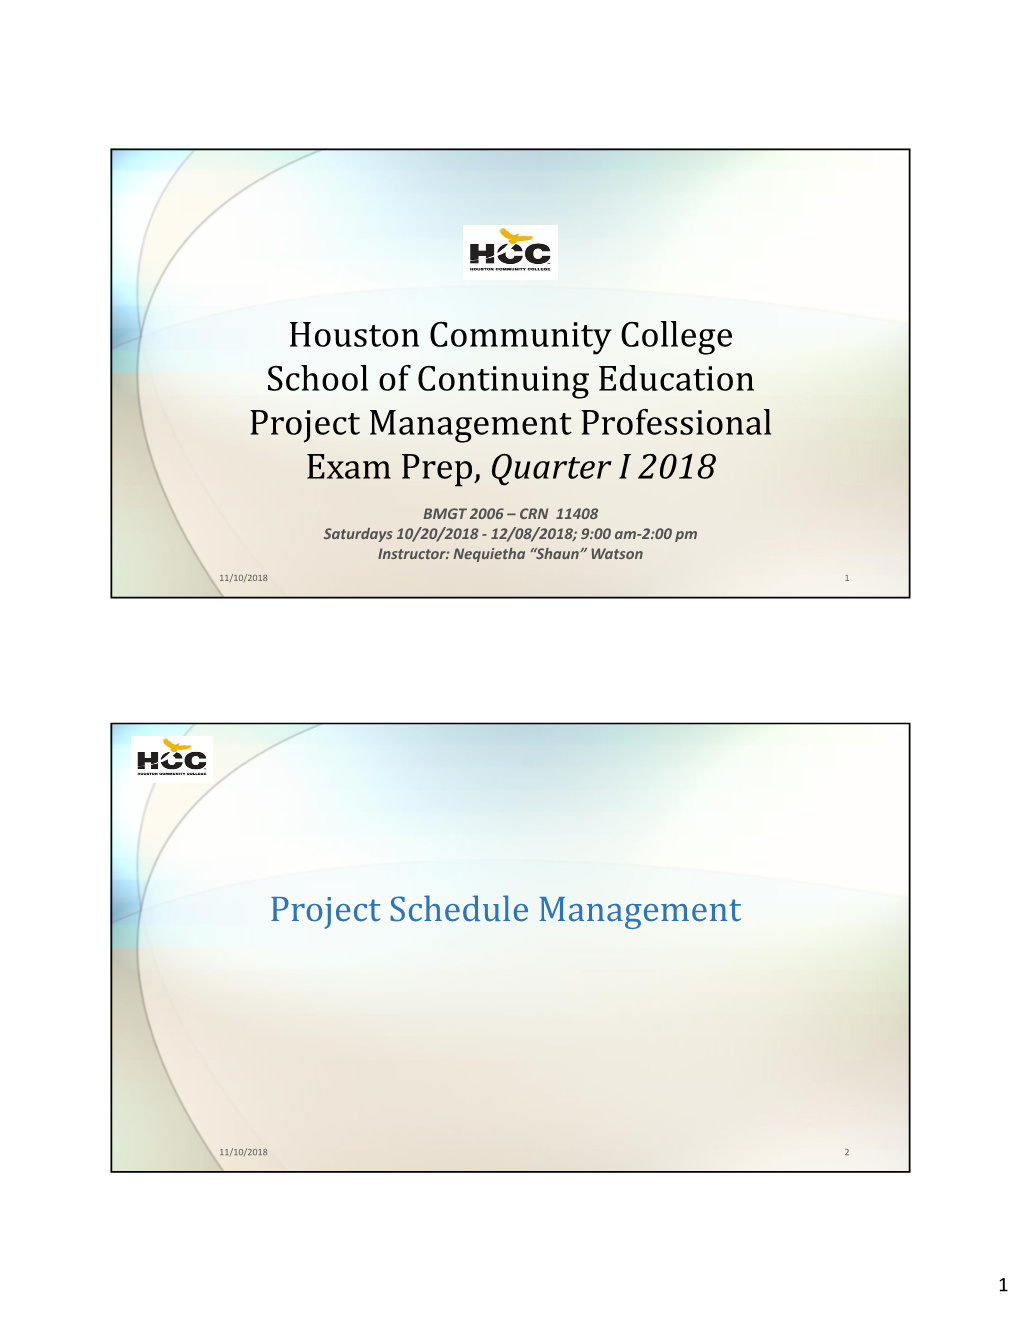 Houston Community College School of Continuing Education Project Management Professional Exam Prep, Quarter I 2018